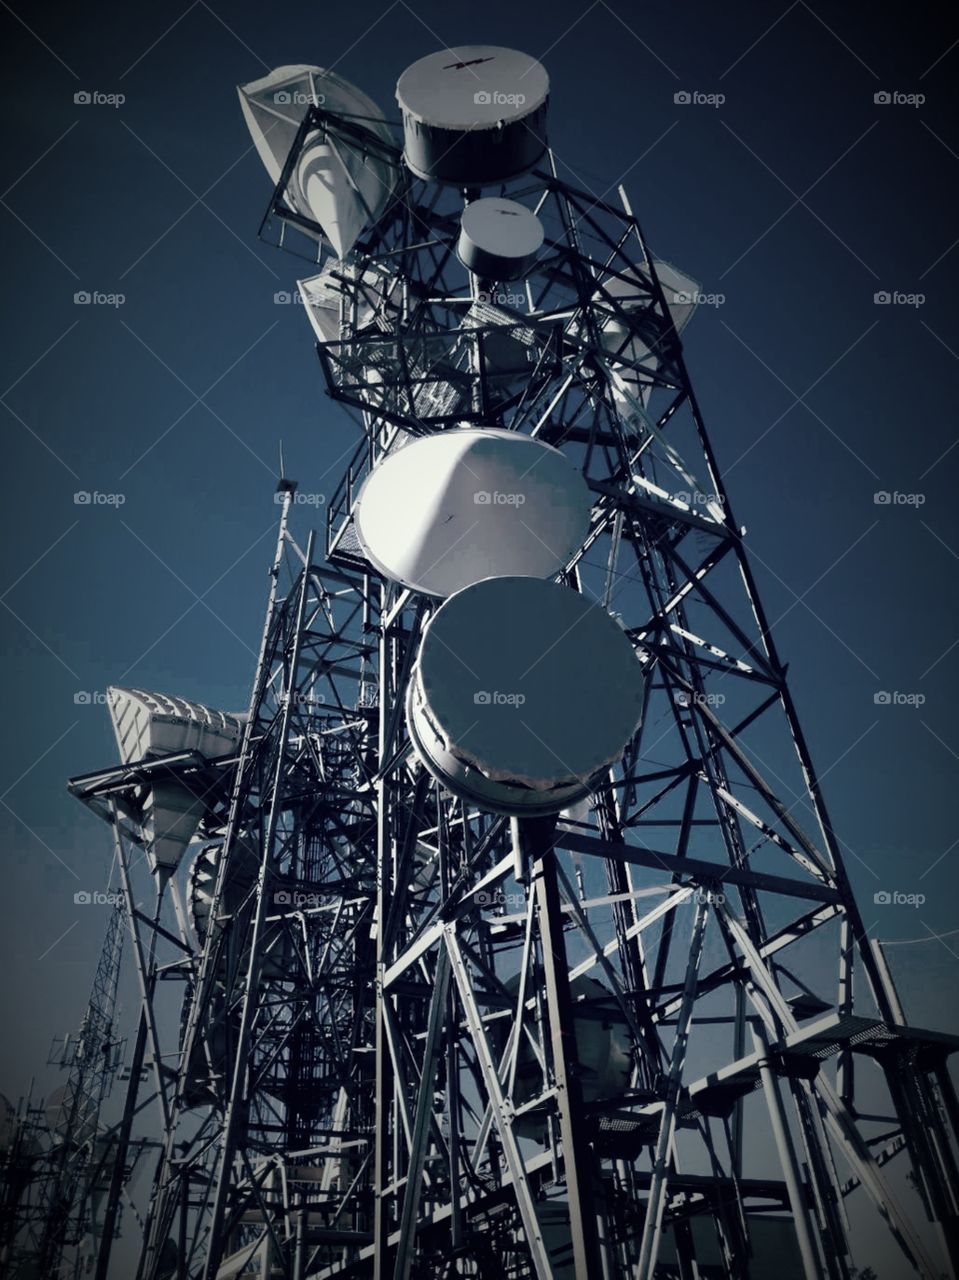 Mt. Ord Payson, AZ communications tower